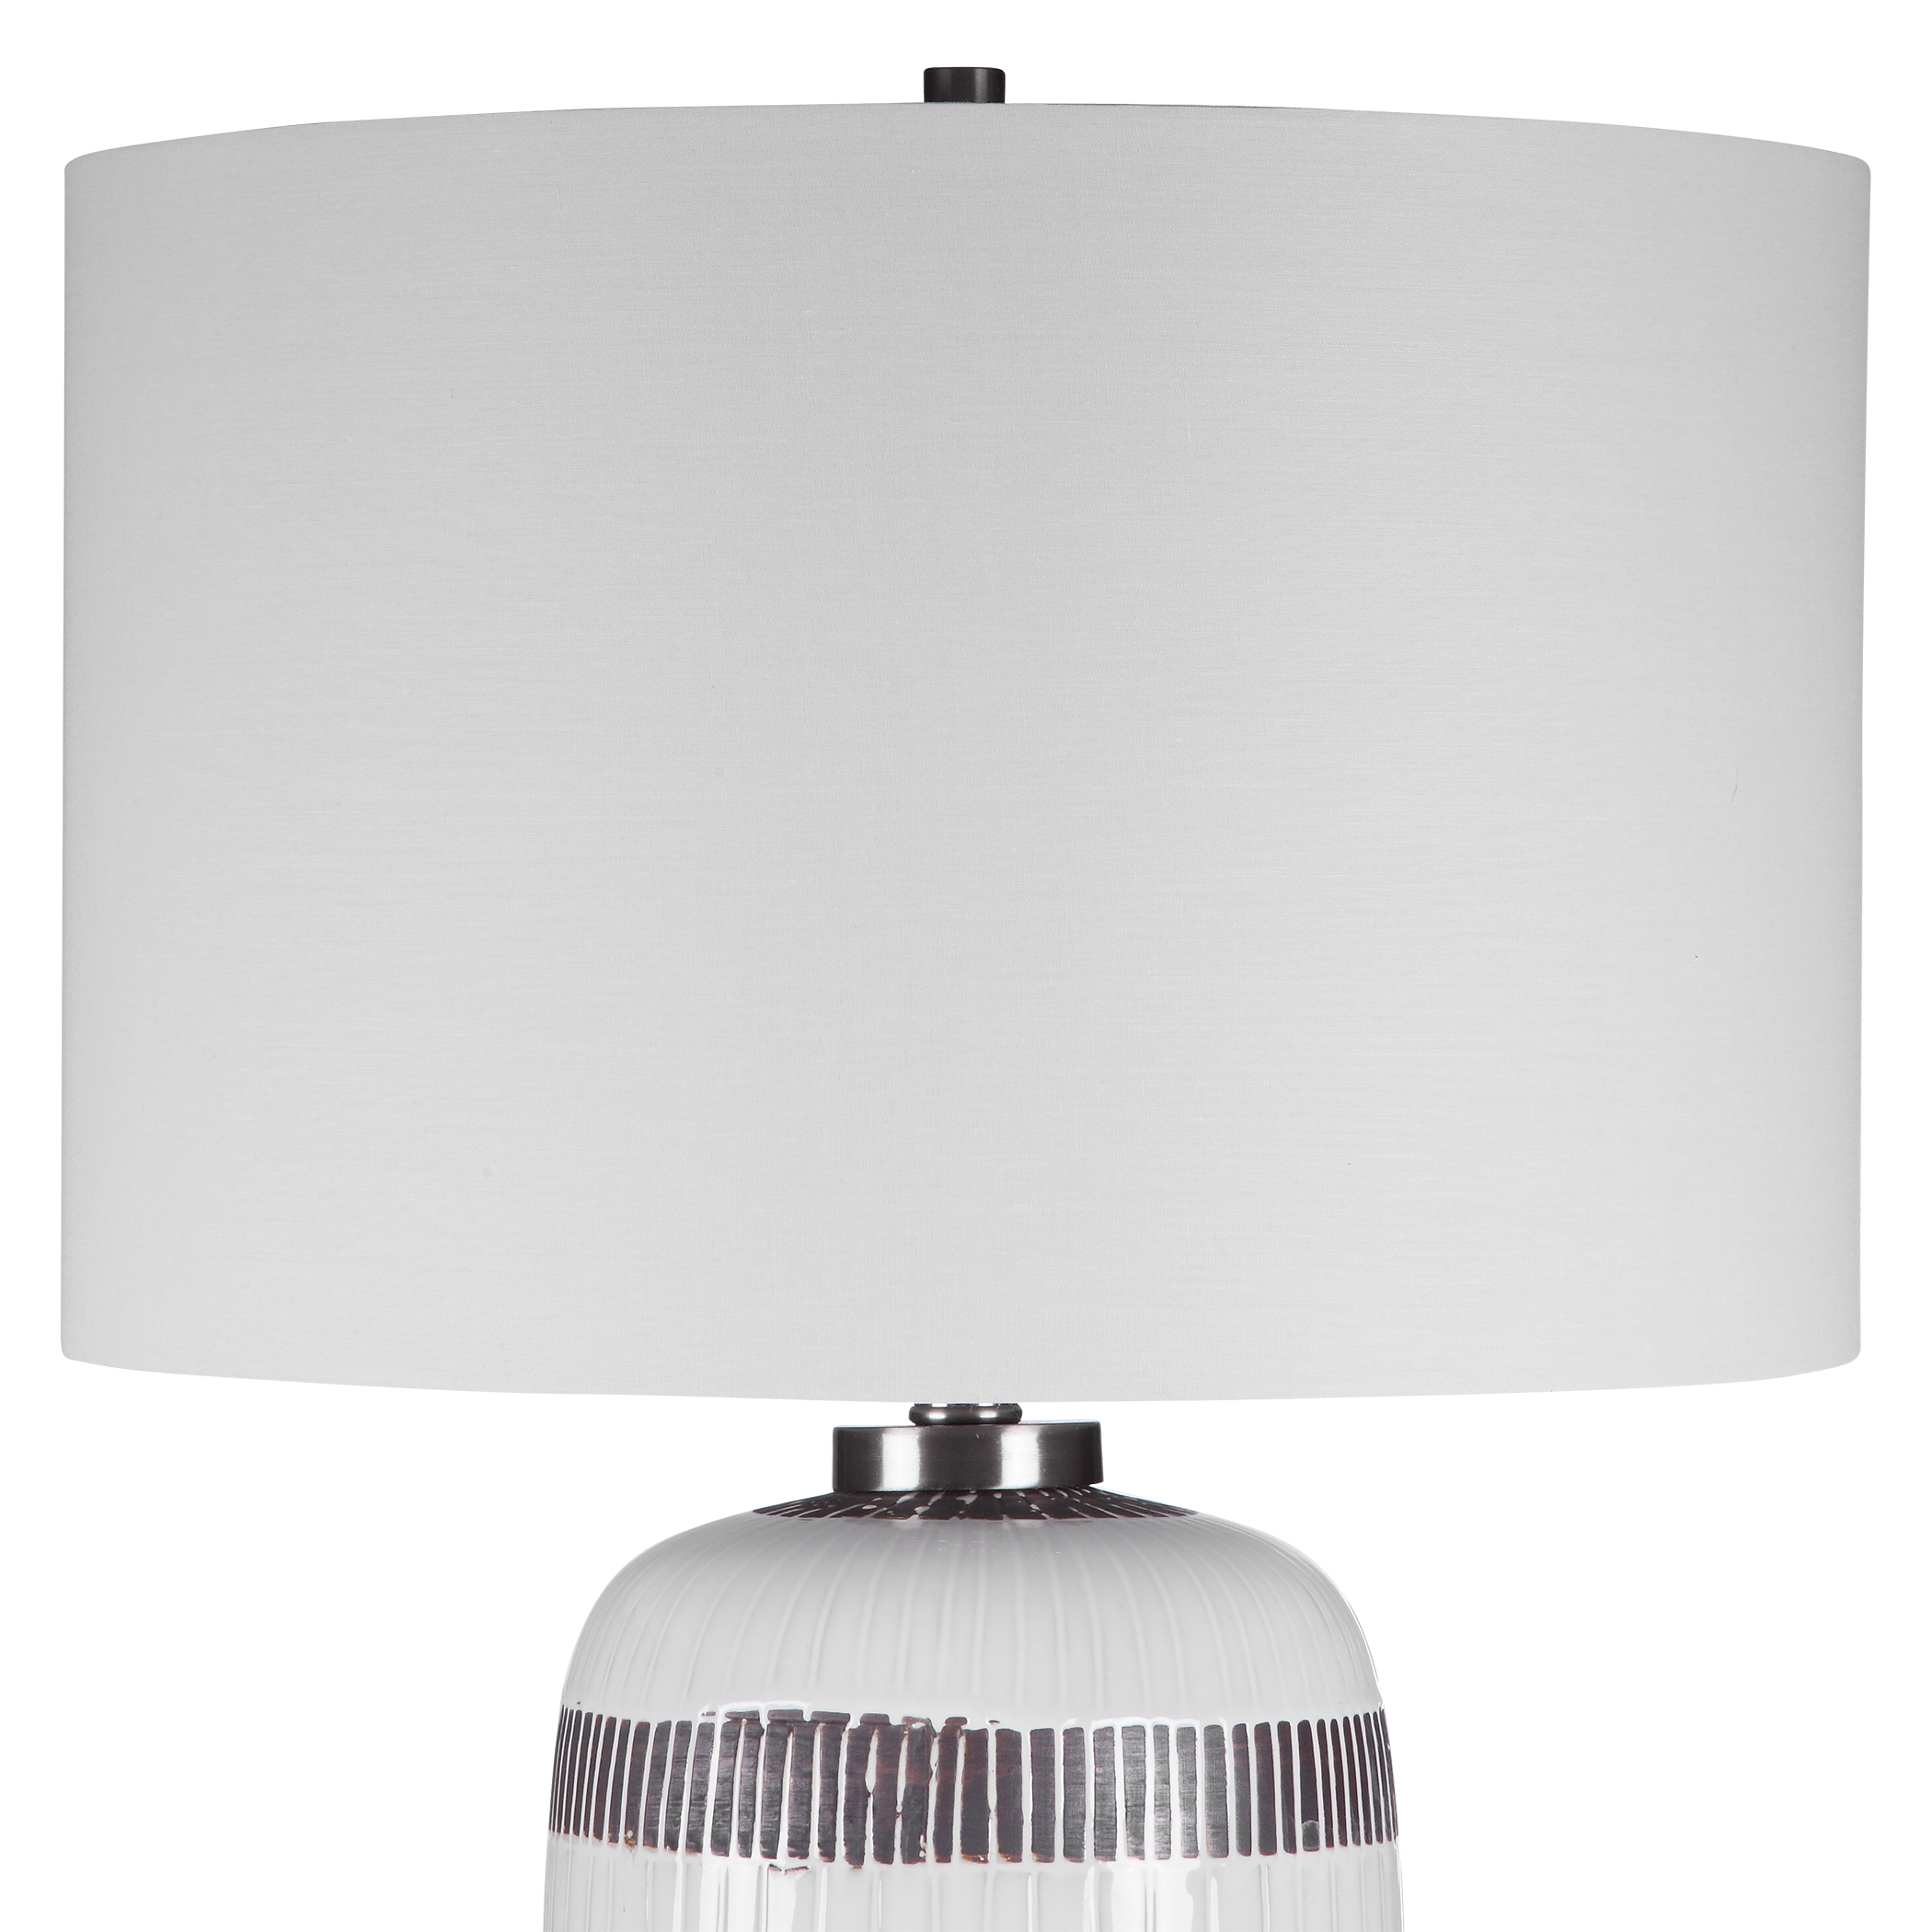 Granger Striped Table Lamp - Image 1